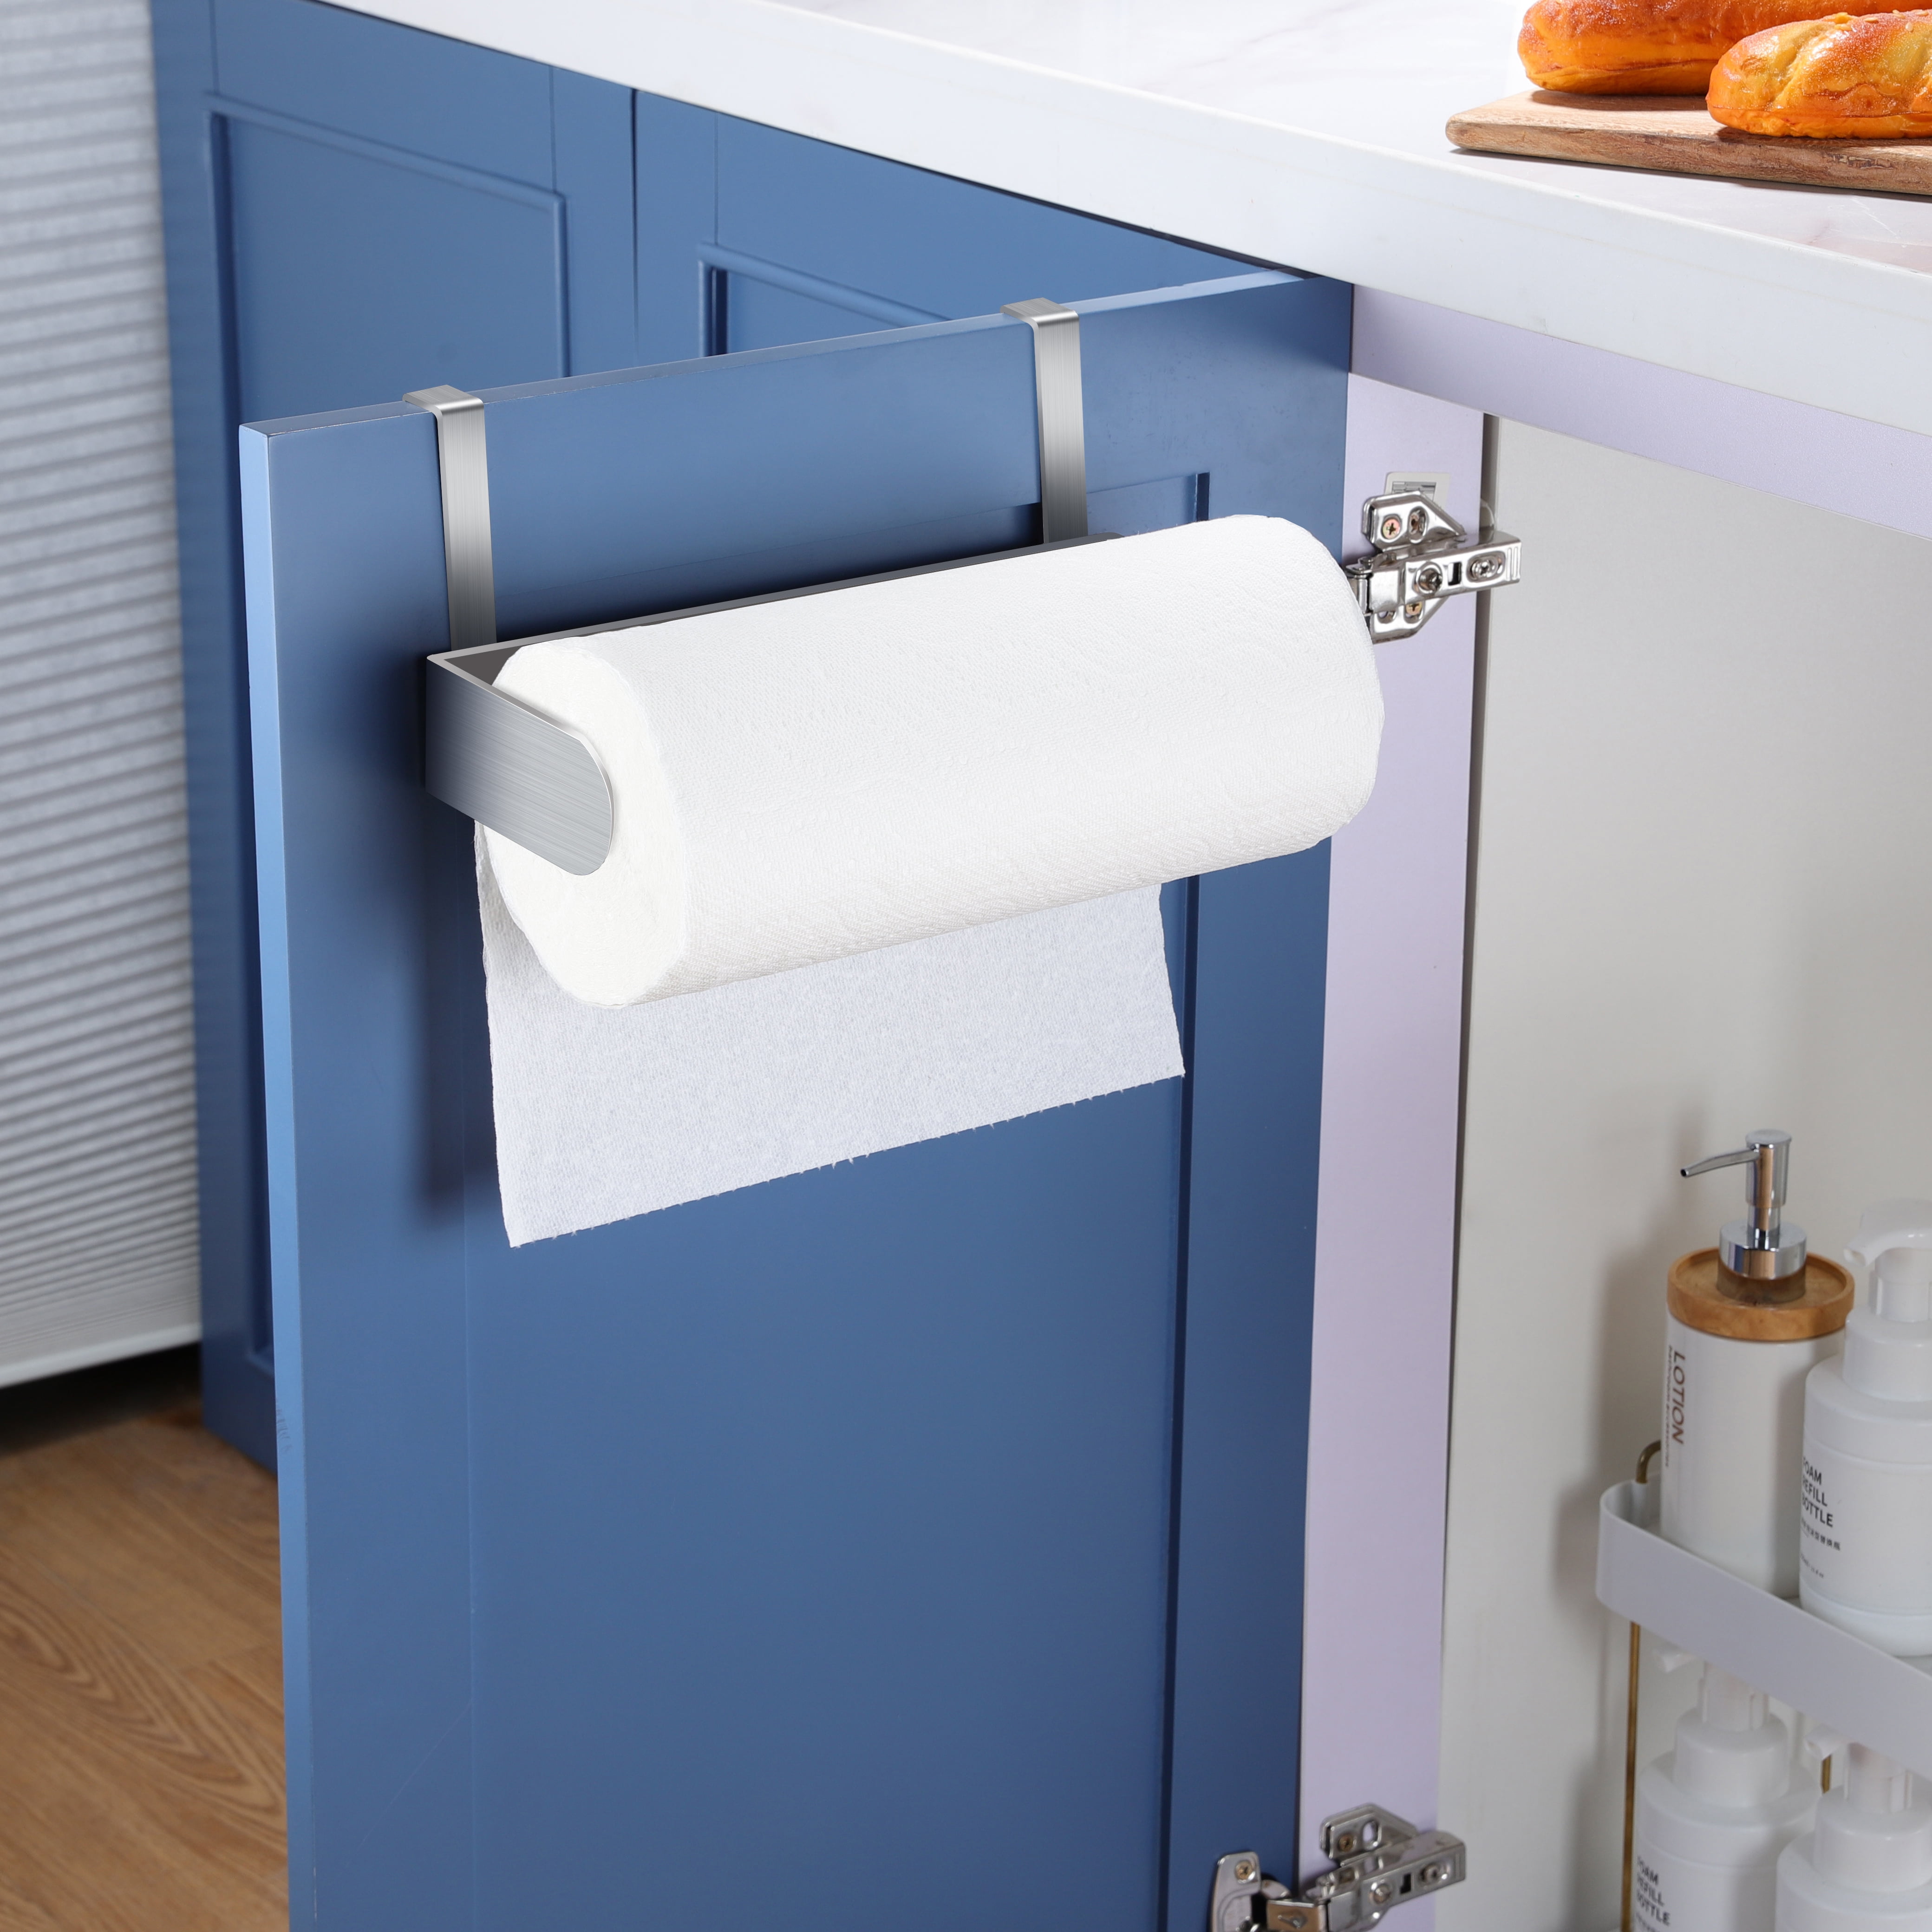 YIGII Paper Towel Holder Under Cabinet KH017Y